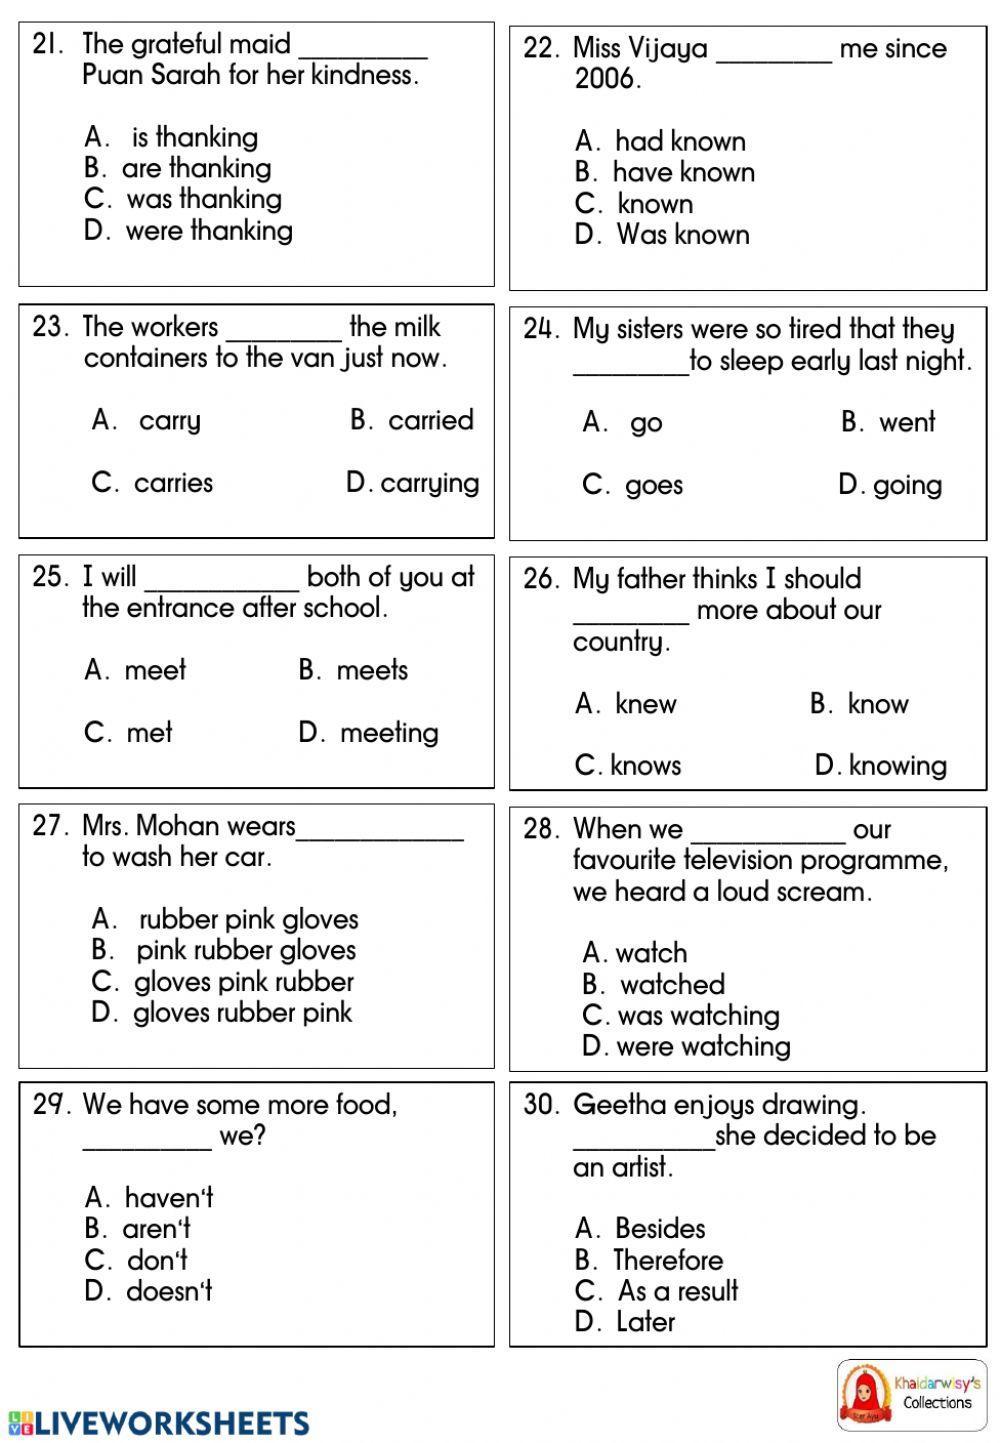 Grammar booster worksheet